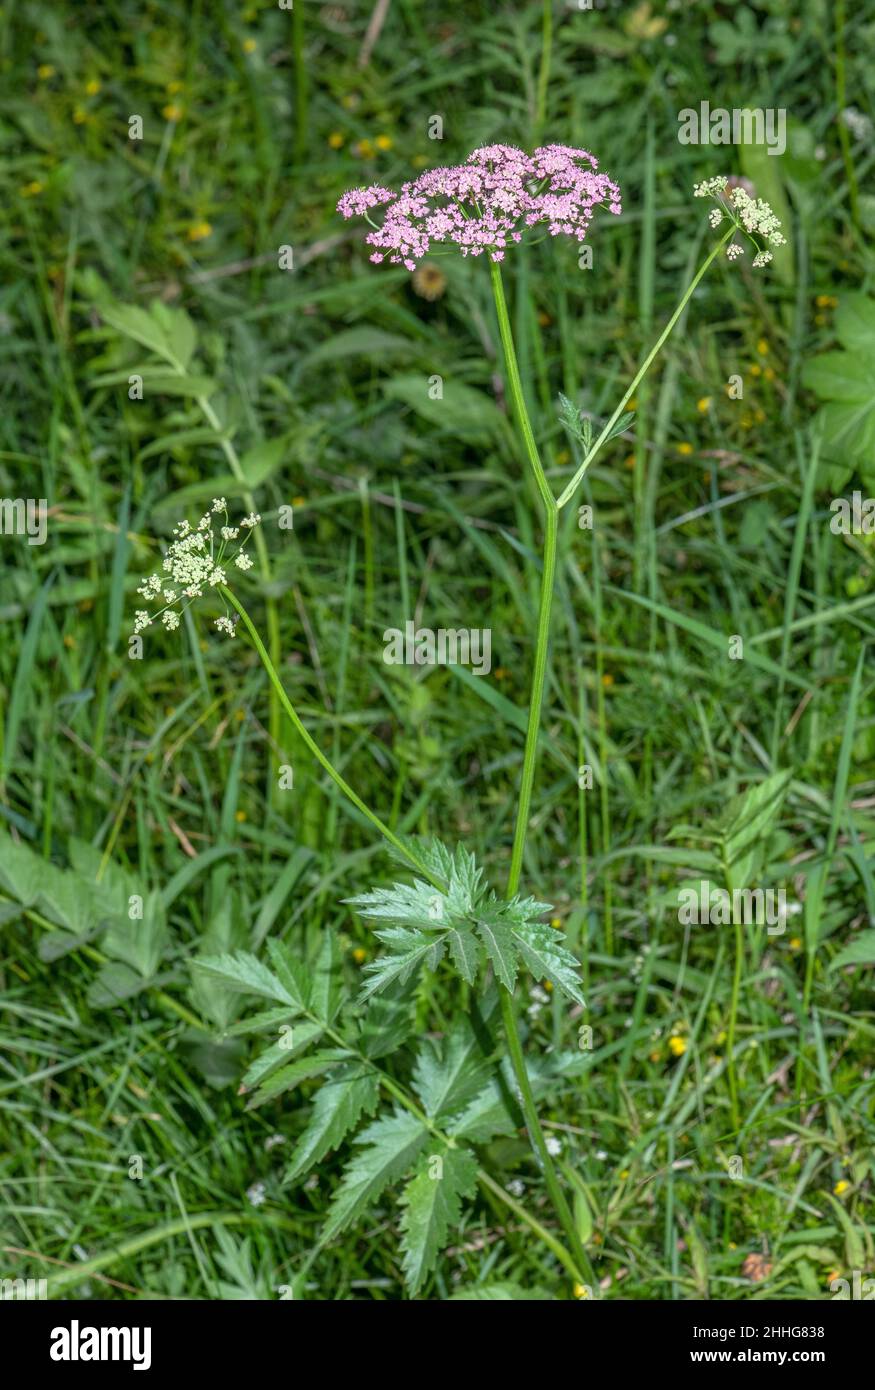 Greater burnet-saxifrage, Pimpinella major in flower in grassland. Stock Photo